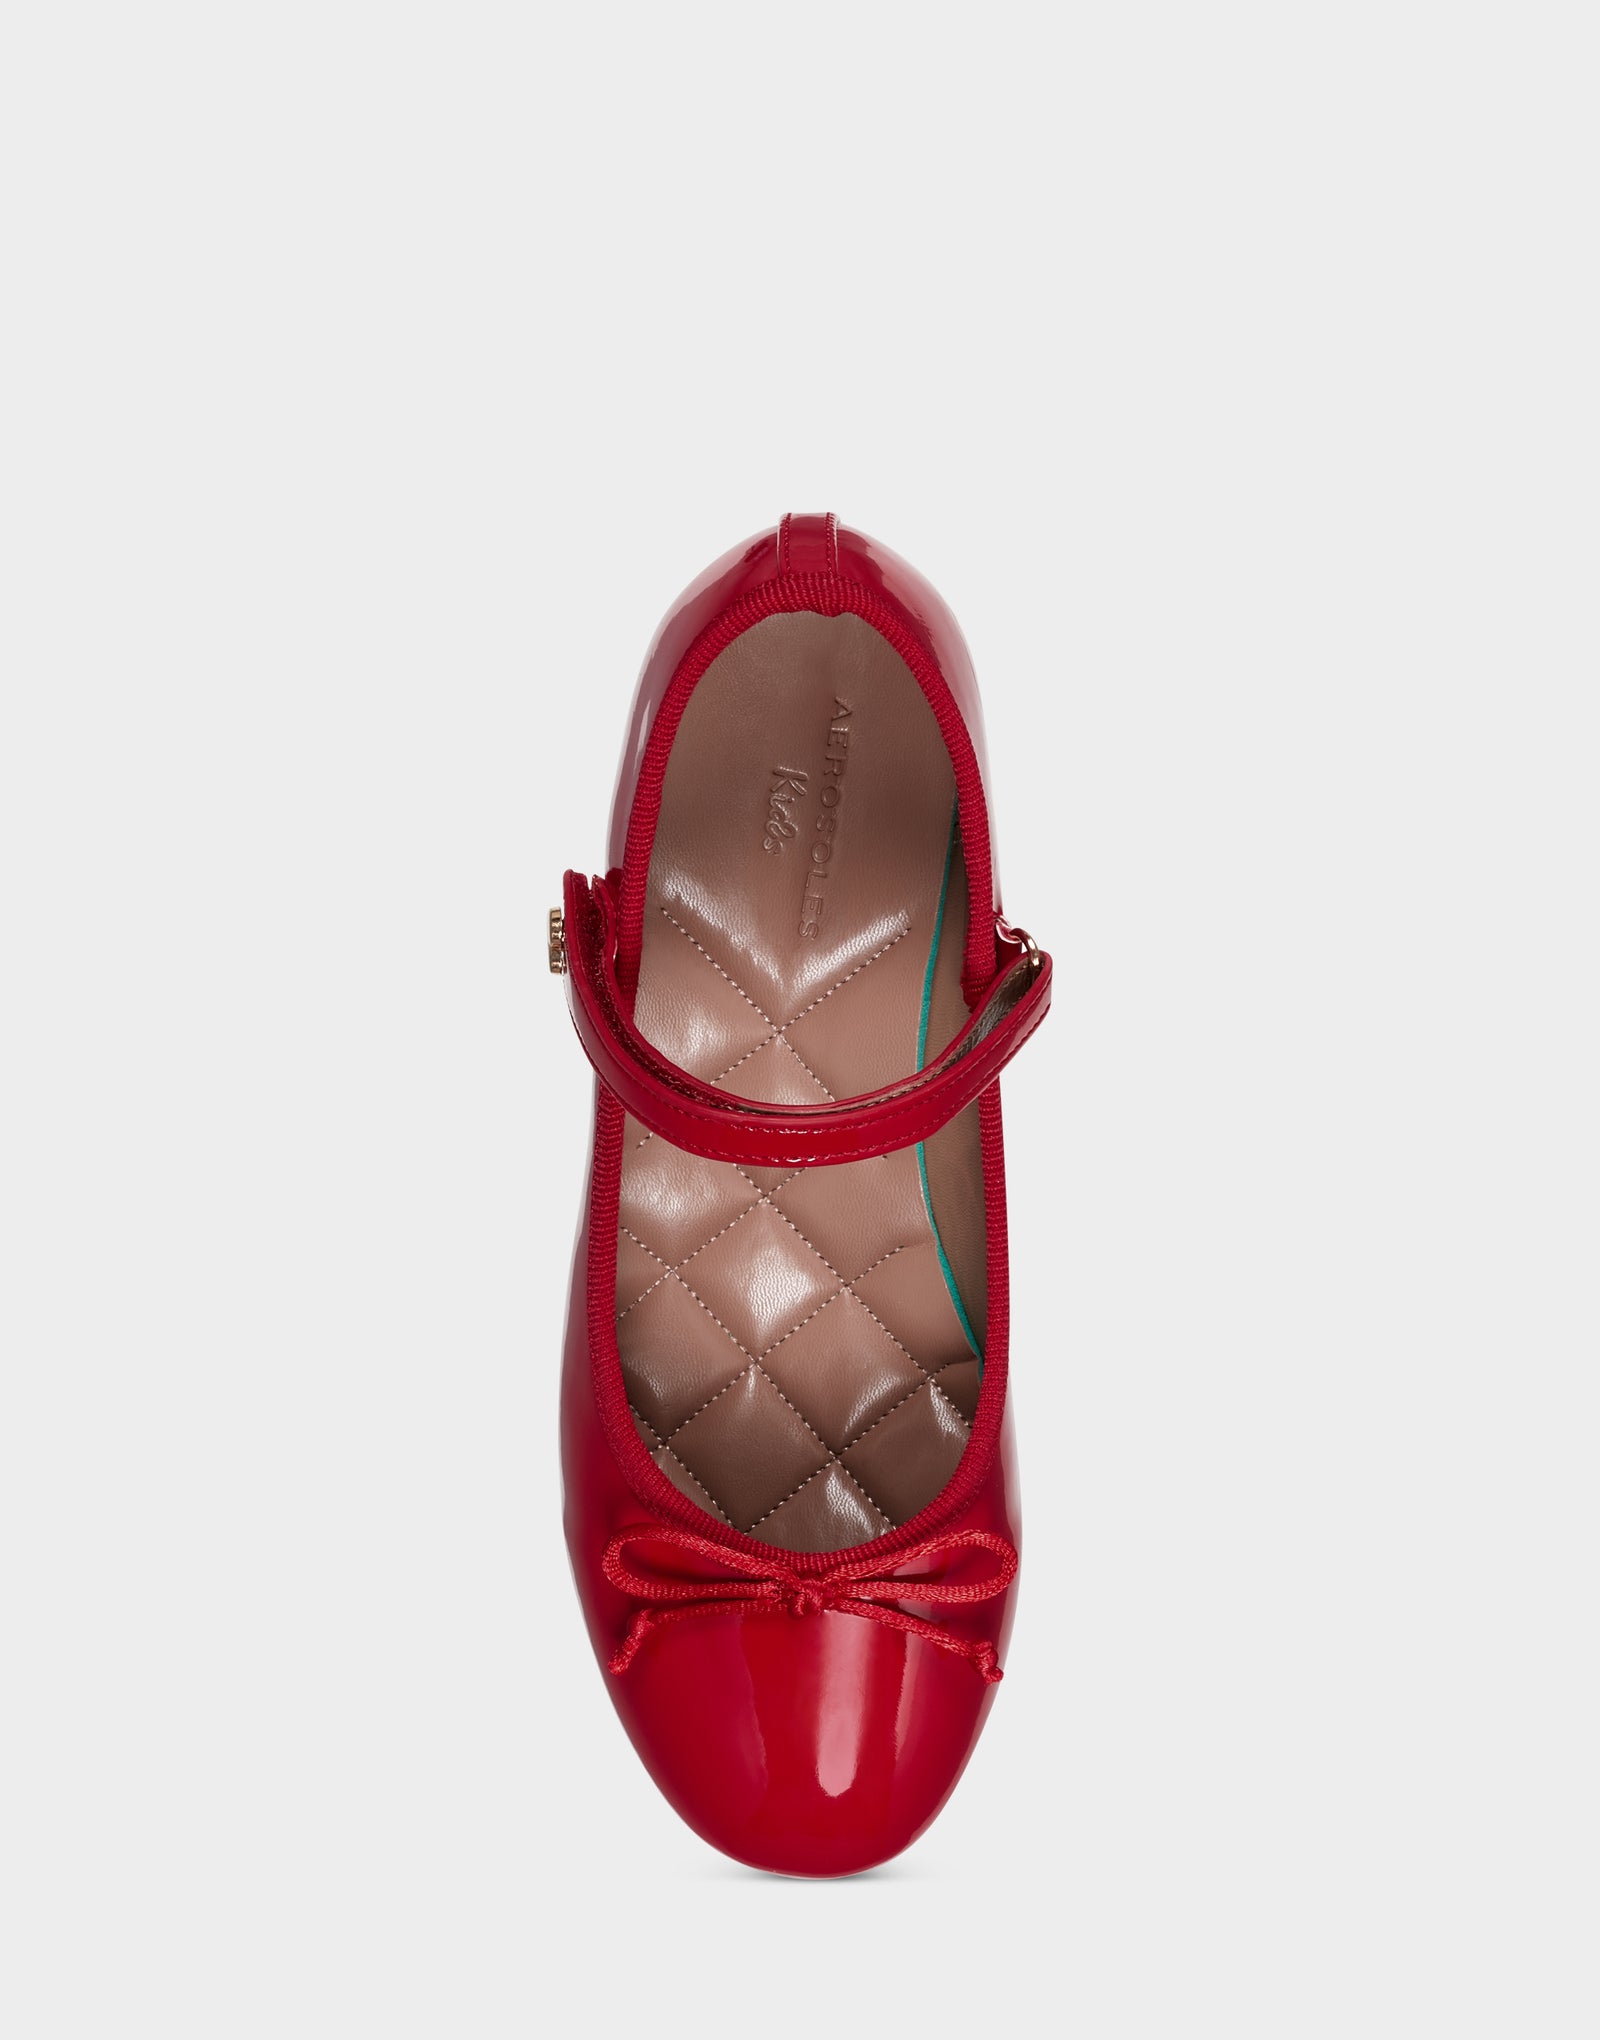 Girls Shoe in Red